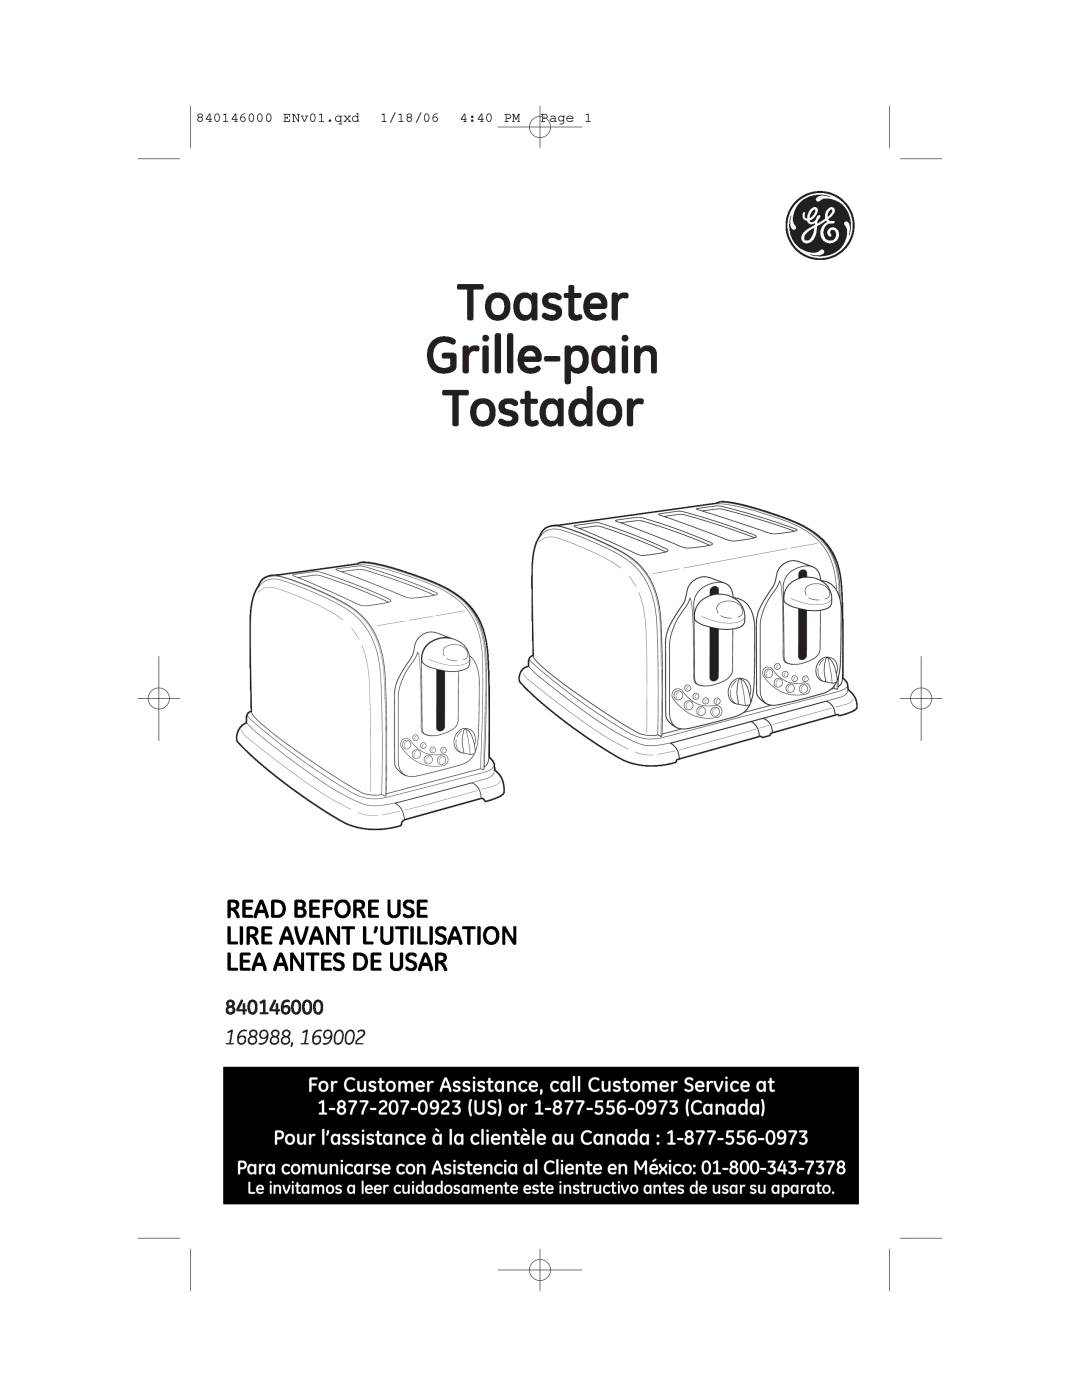 GE 169002 manual 840146000, Toaster Grille-pain Tostador, Read Before Use Lire Avant L’Utilisation, Lea Antes De Usar 